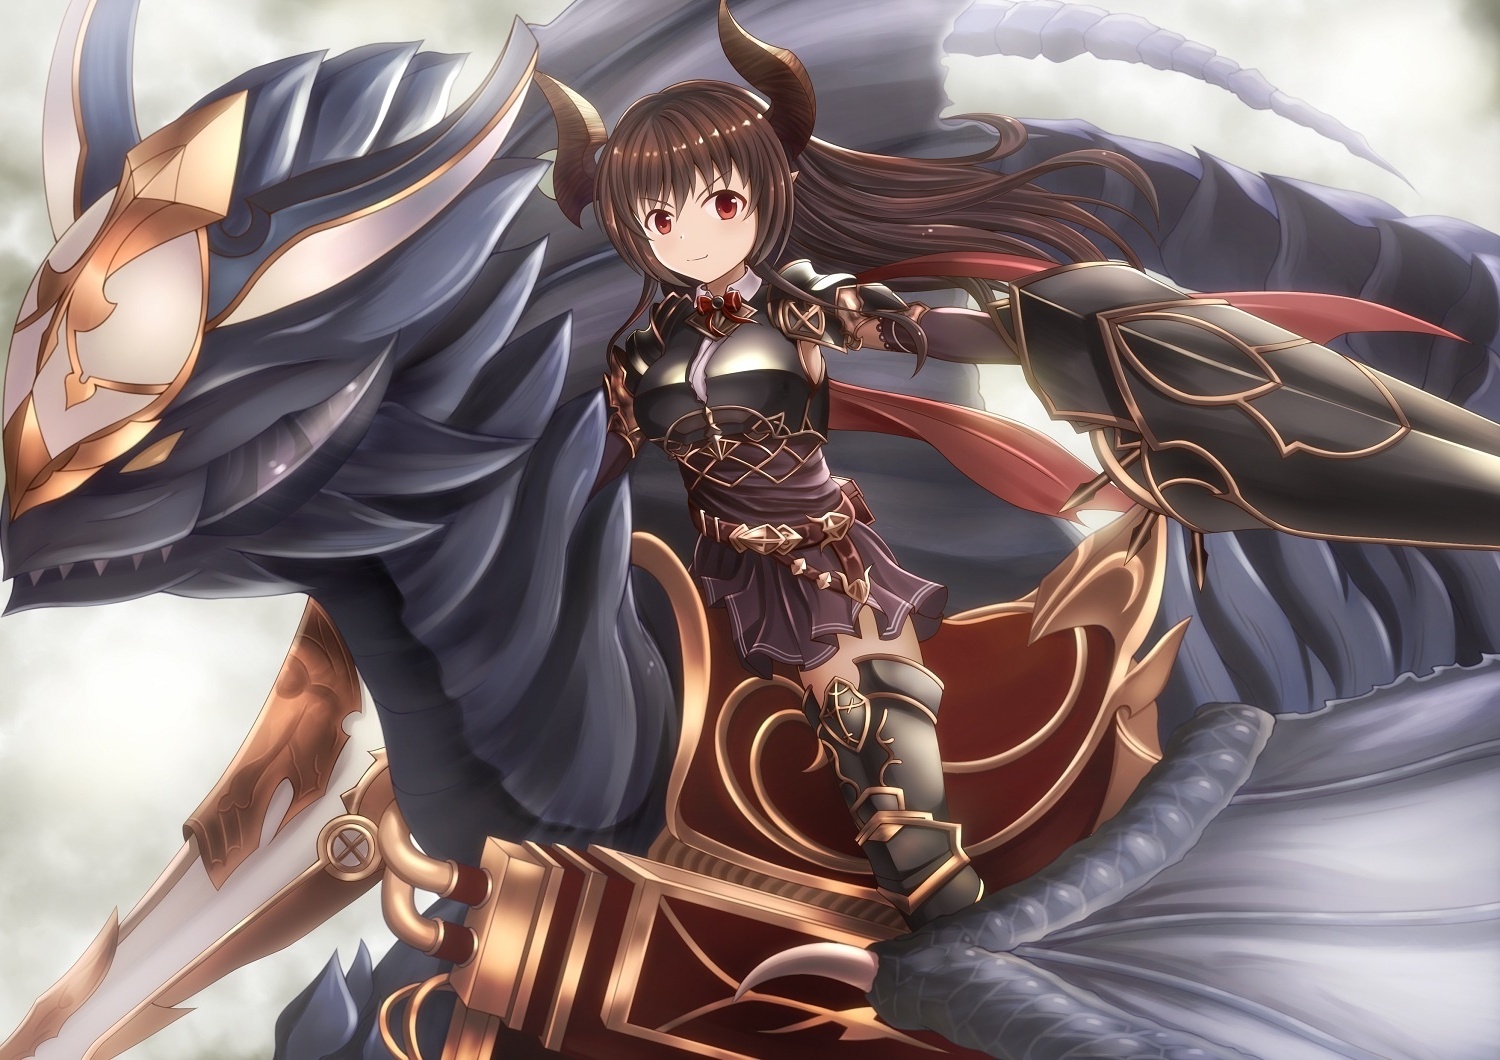 Fantasy Girl Knight Warrior Anime Armor Stock Photo by ©Ravven 432800692